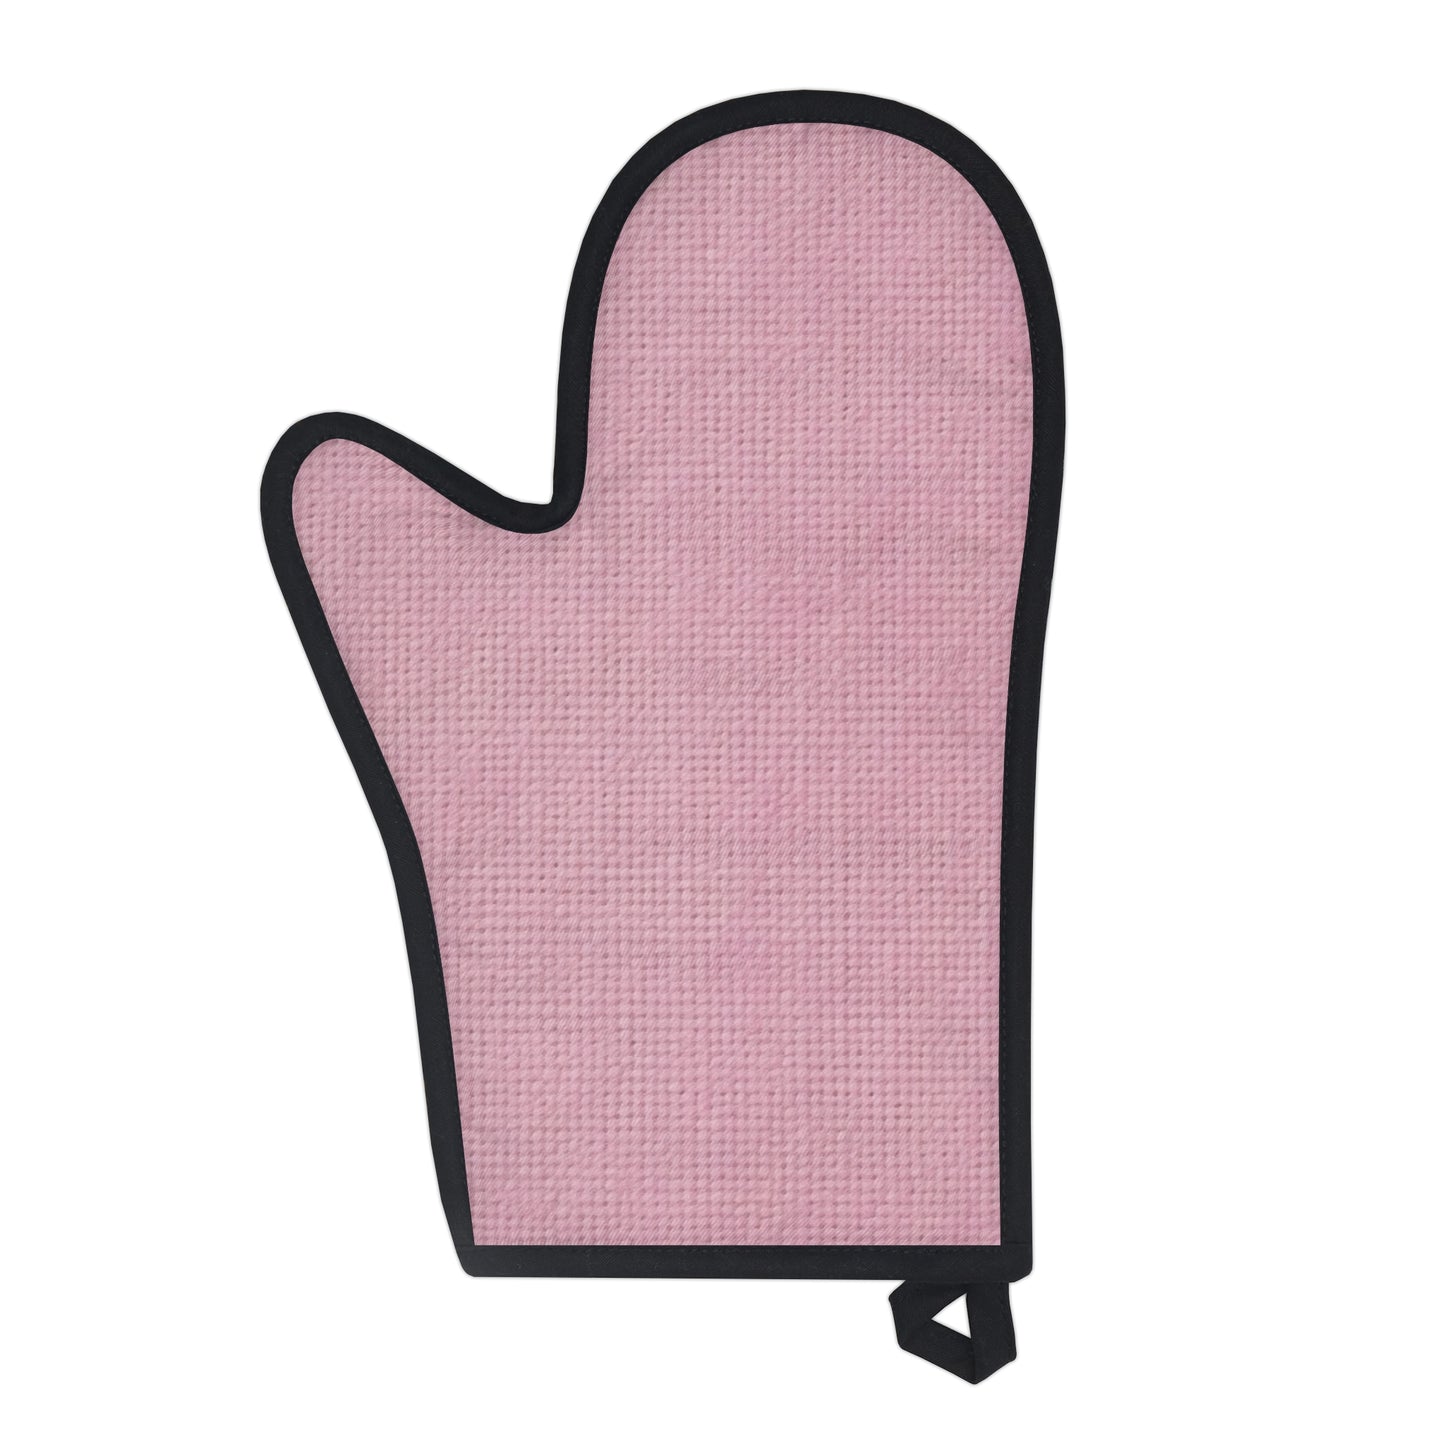 Blushing Garment Dye Pink: Denim-Inspired, Soft-Toned Fabric - Oven Glove